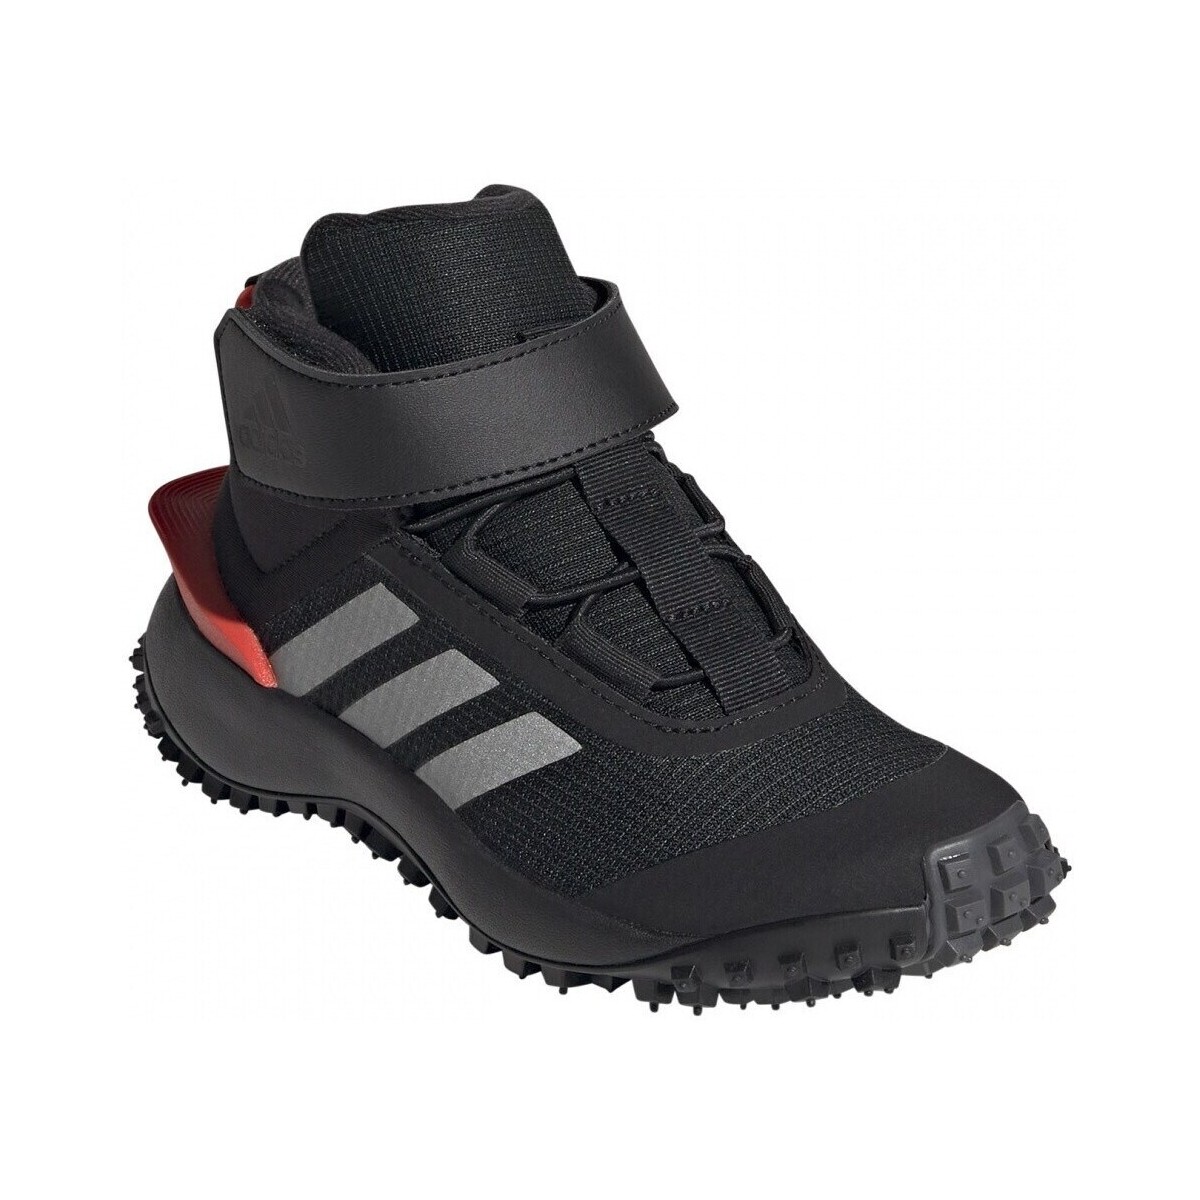 Adidas Fortatrail El K Black